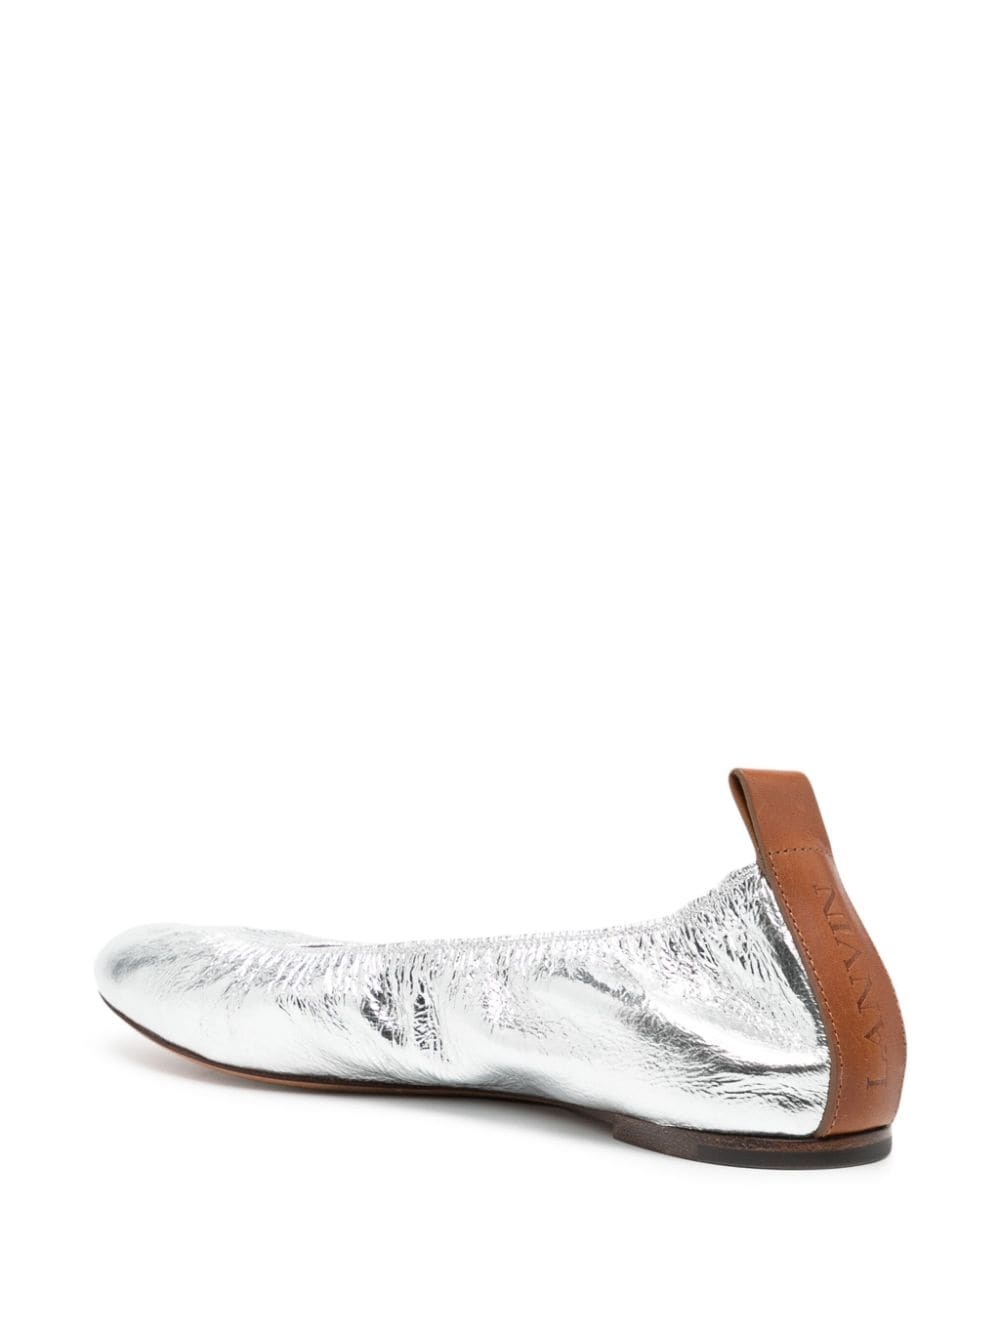 metallic leather ballerina shoes - 3